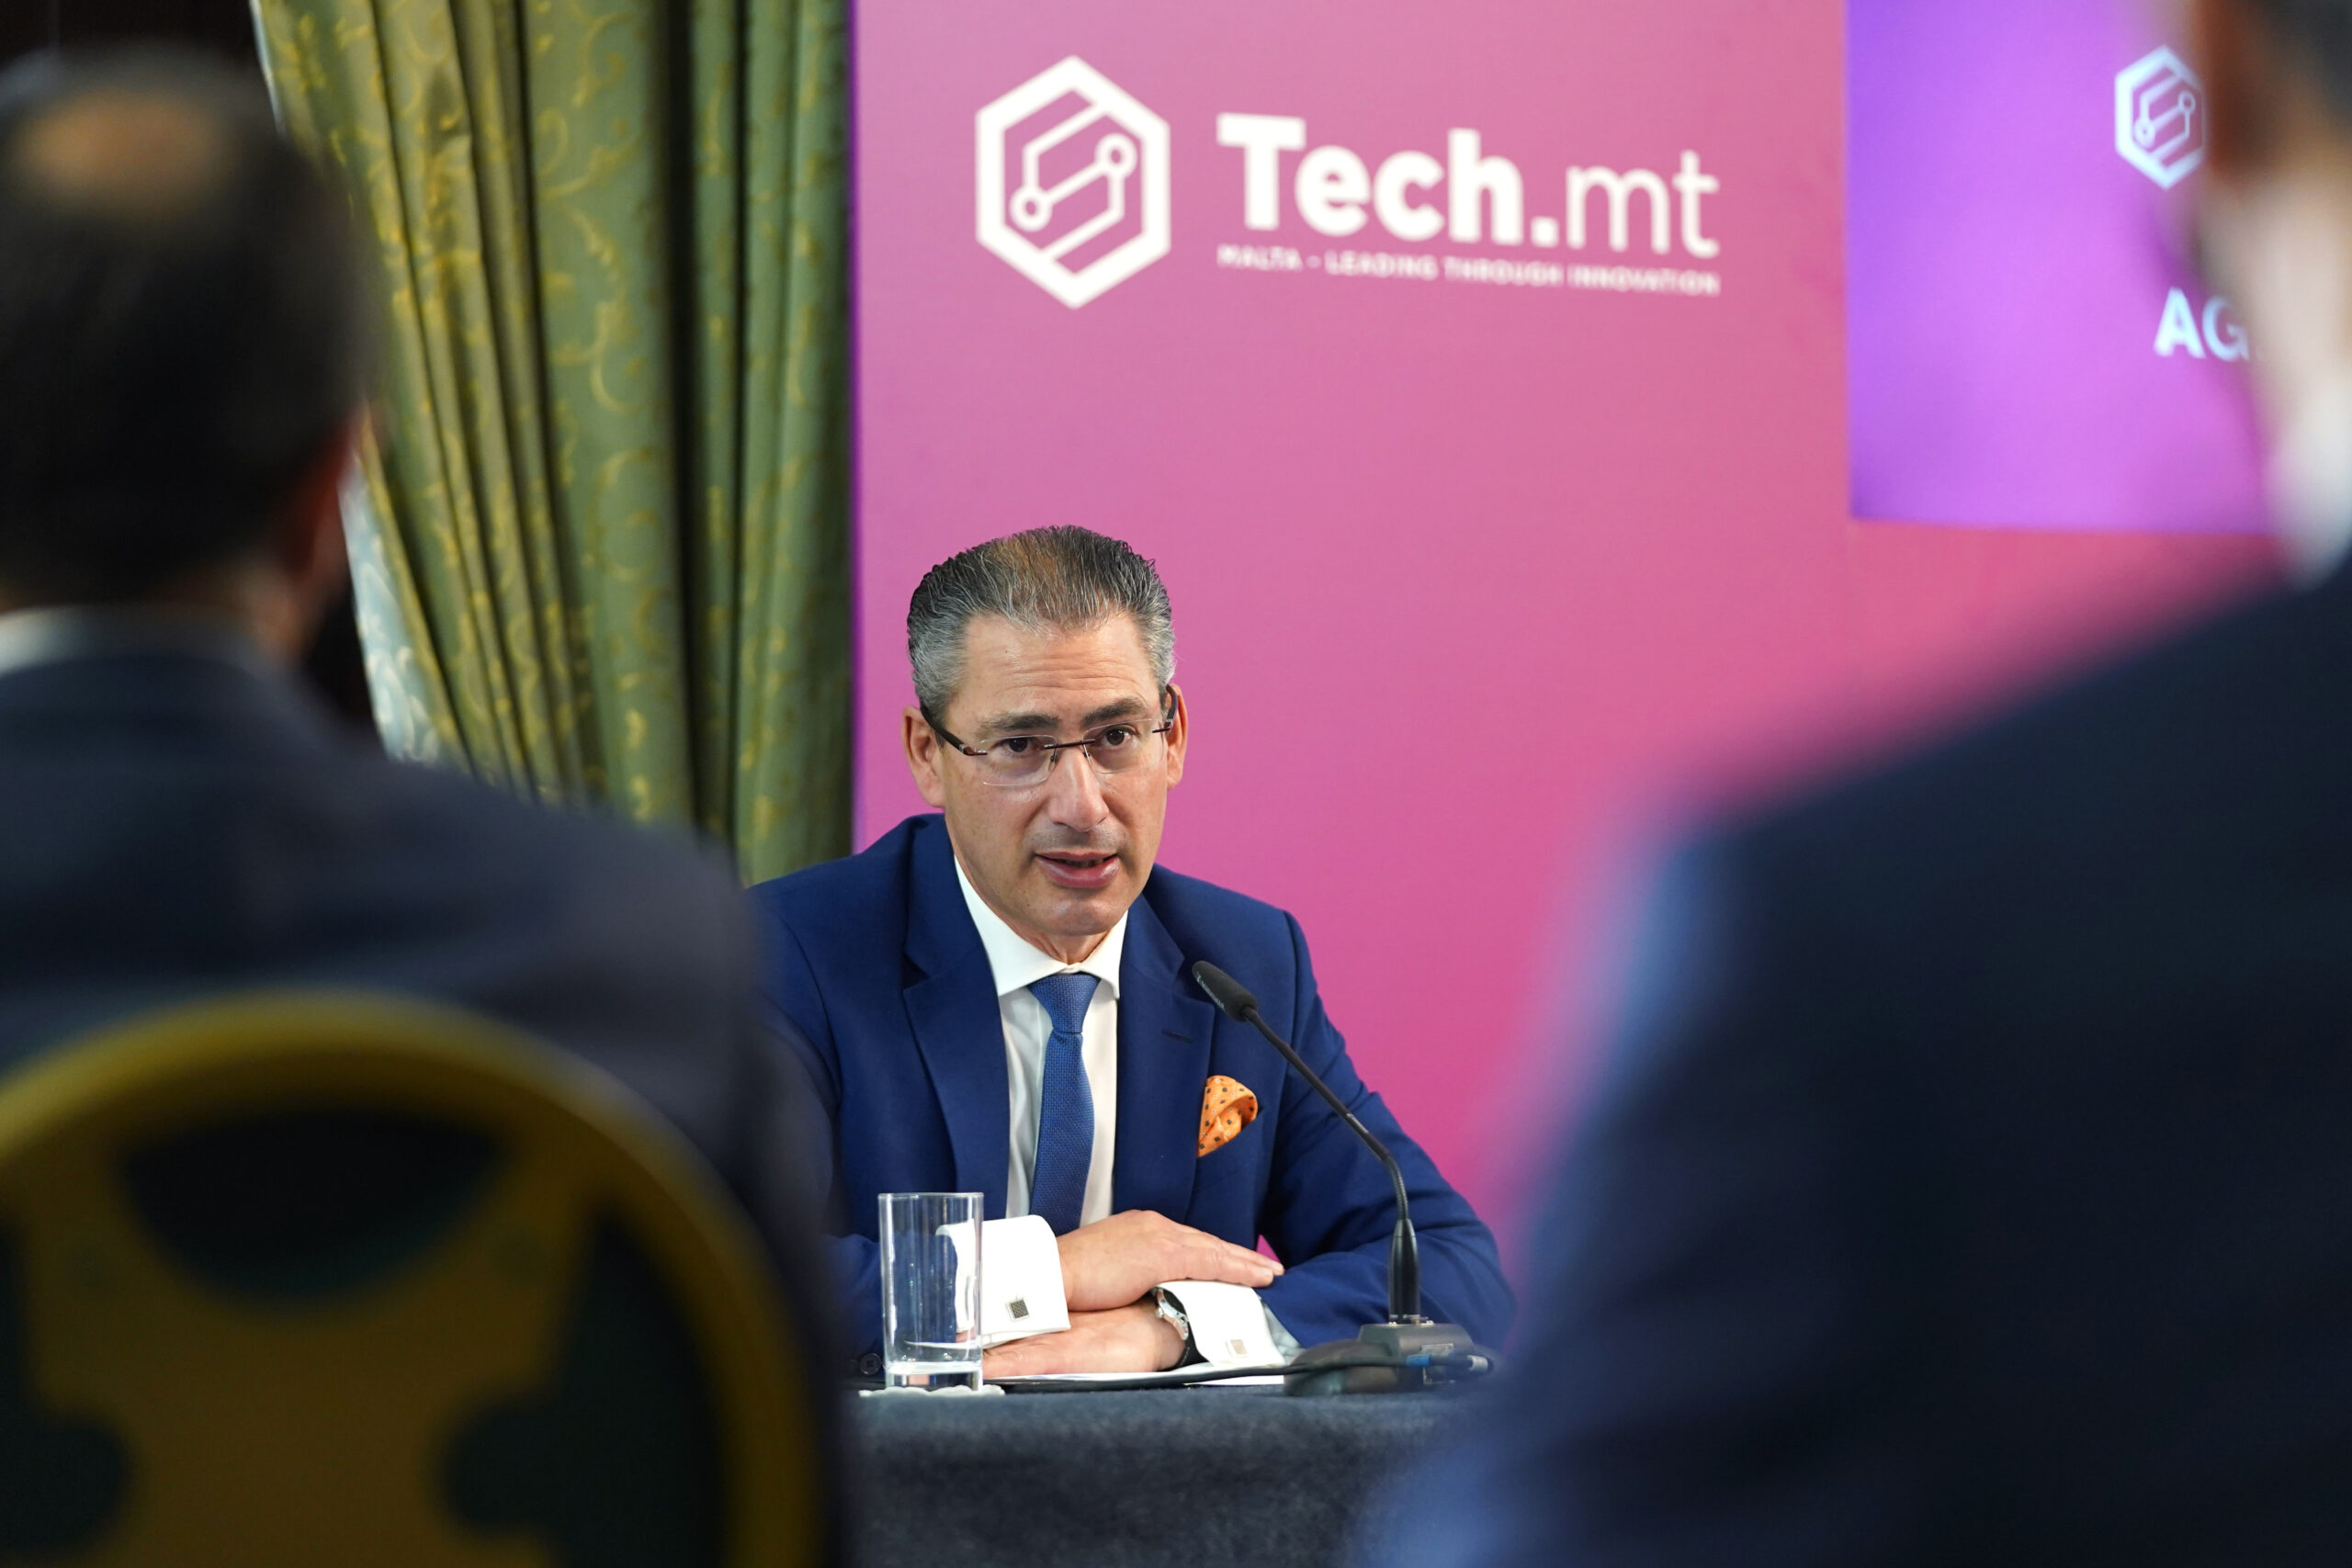 Tech.MT backs The Malta Chamber’s vision towards the digitalisation of Malta